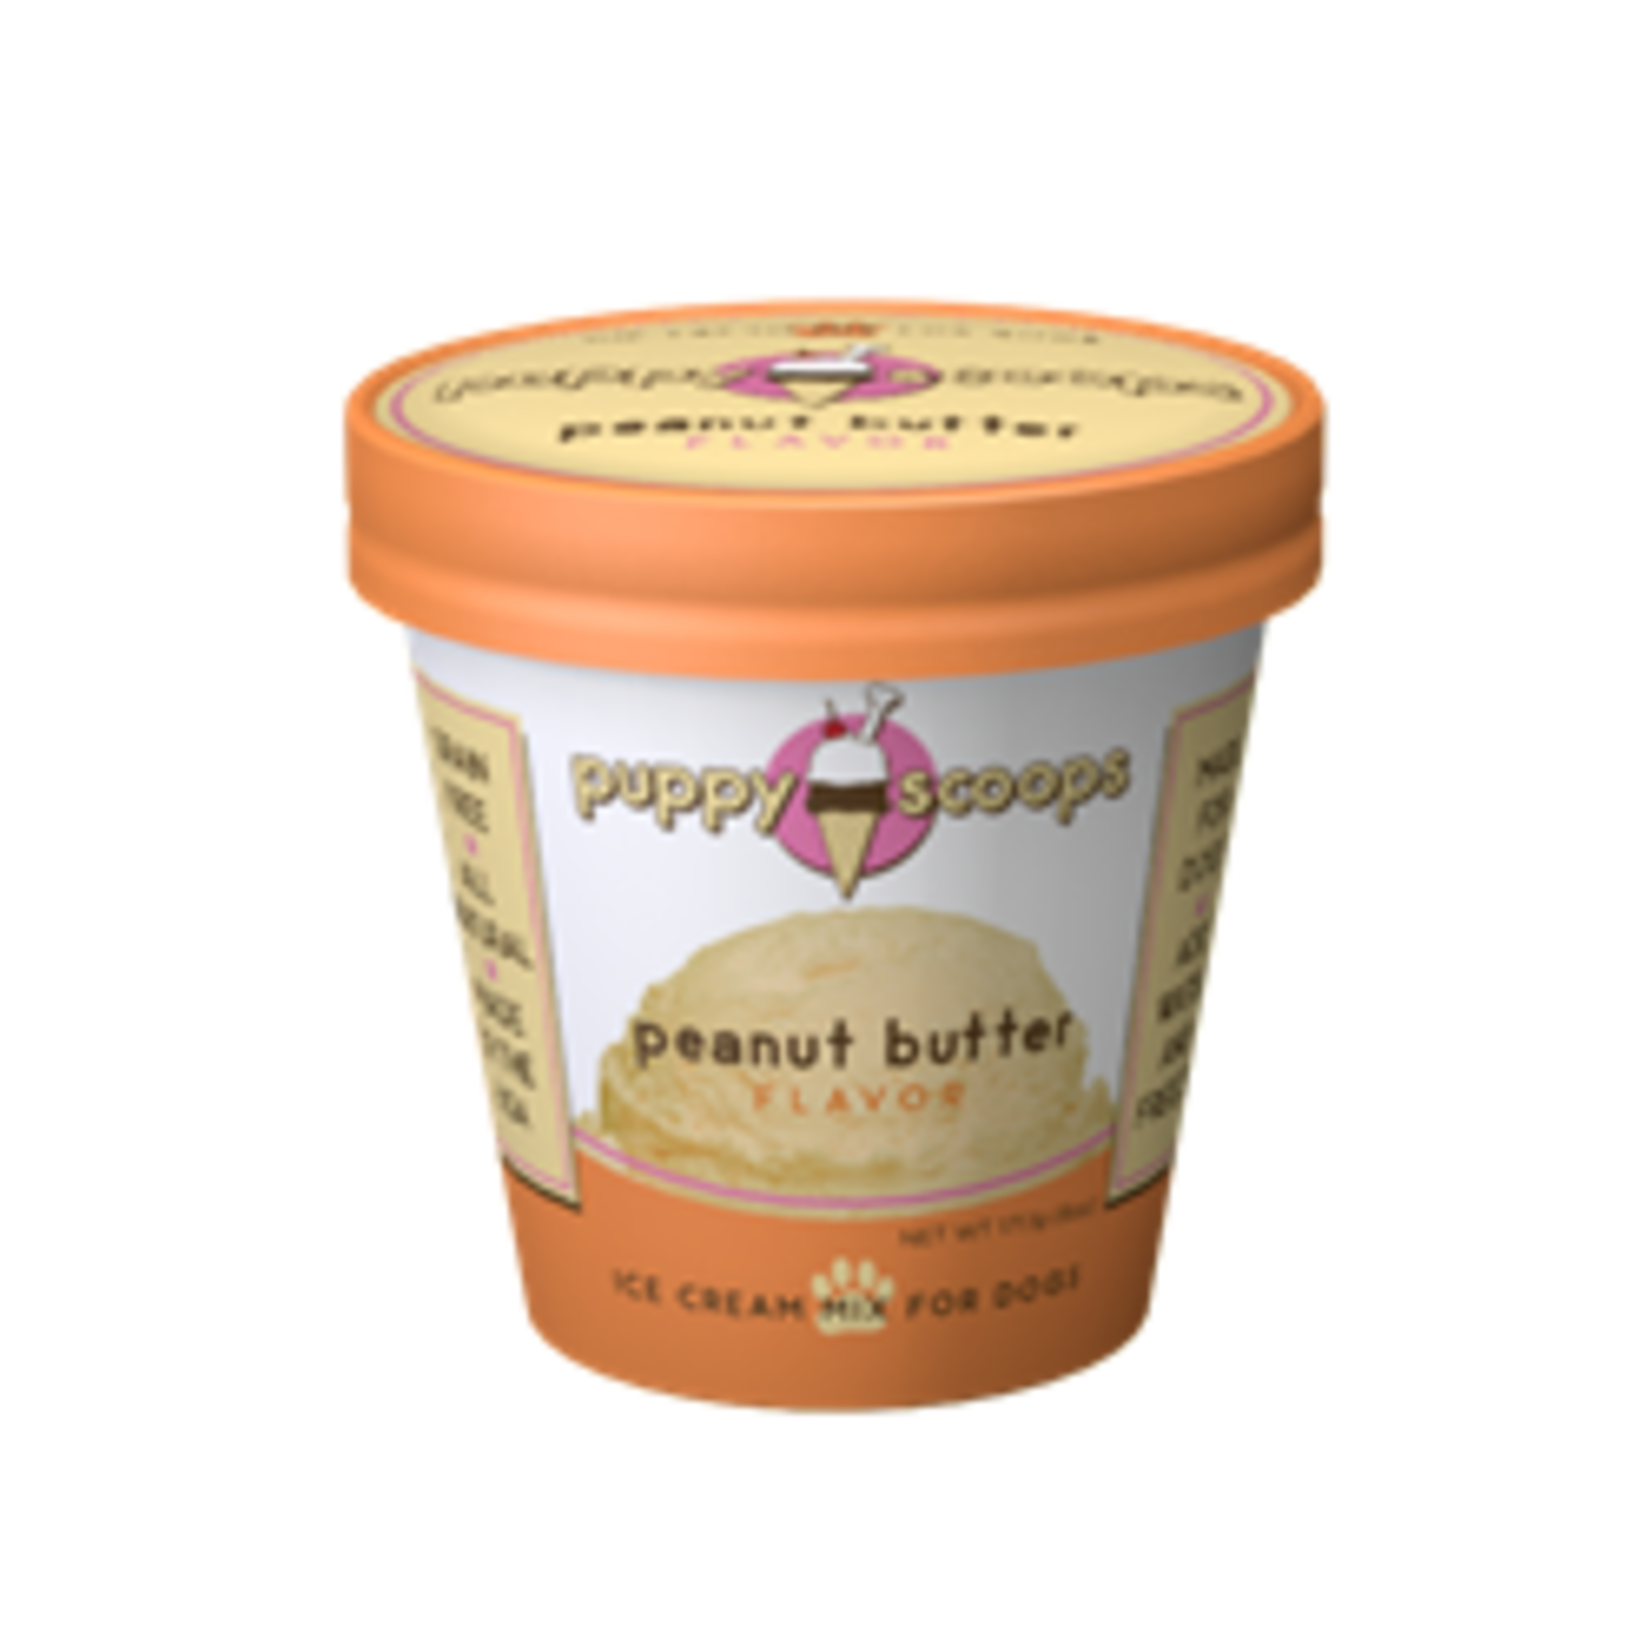 Puppy Cake Puppy Scoops Ice Cream - Peanut Butter